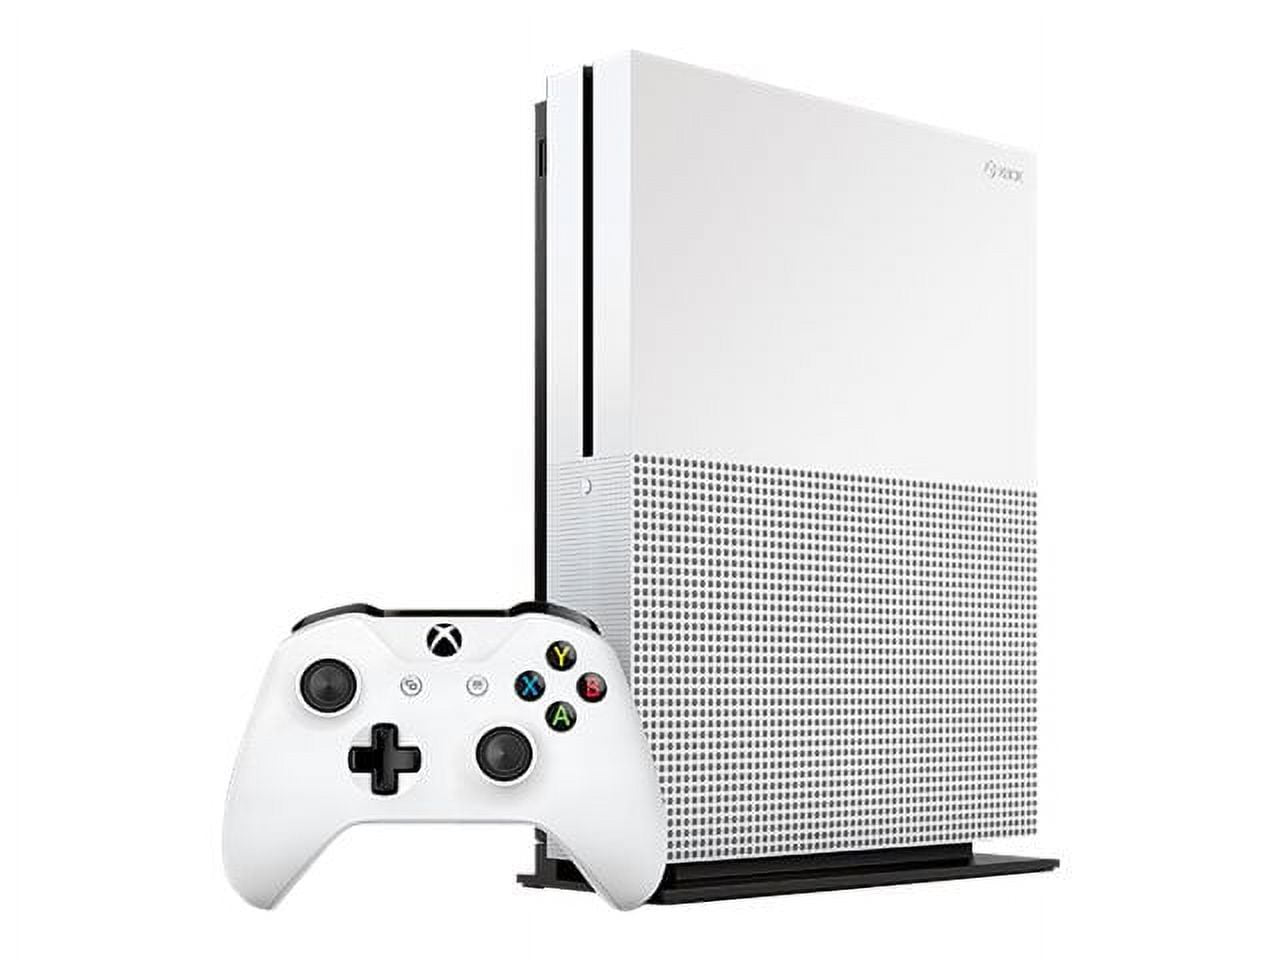 Microsoft Xbox ONE S 1TB Battlefield 1 Special Edition Bundle